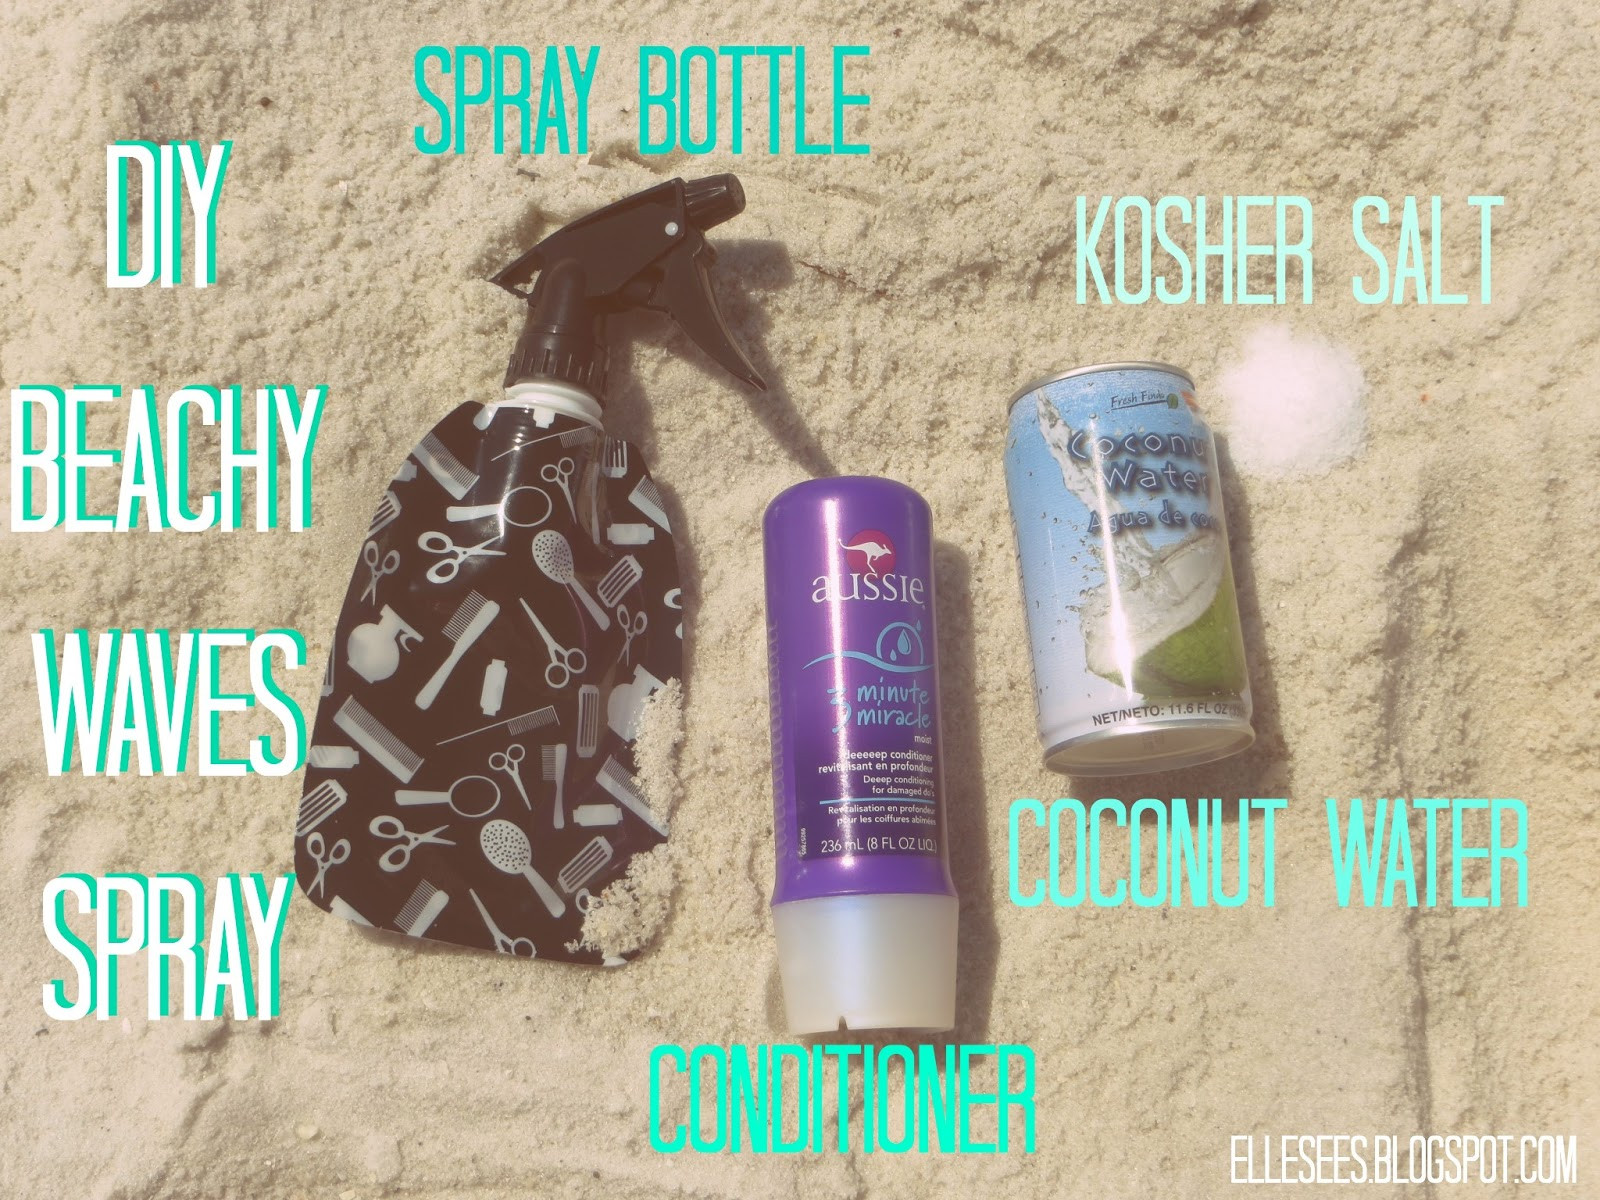 Best ideas about DIY Beach Hair Spray
. Save or Pin Elle Sees Beauty Blogger in Atlanta Beach Week DIY Now.